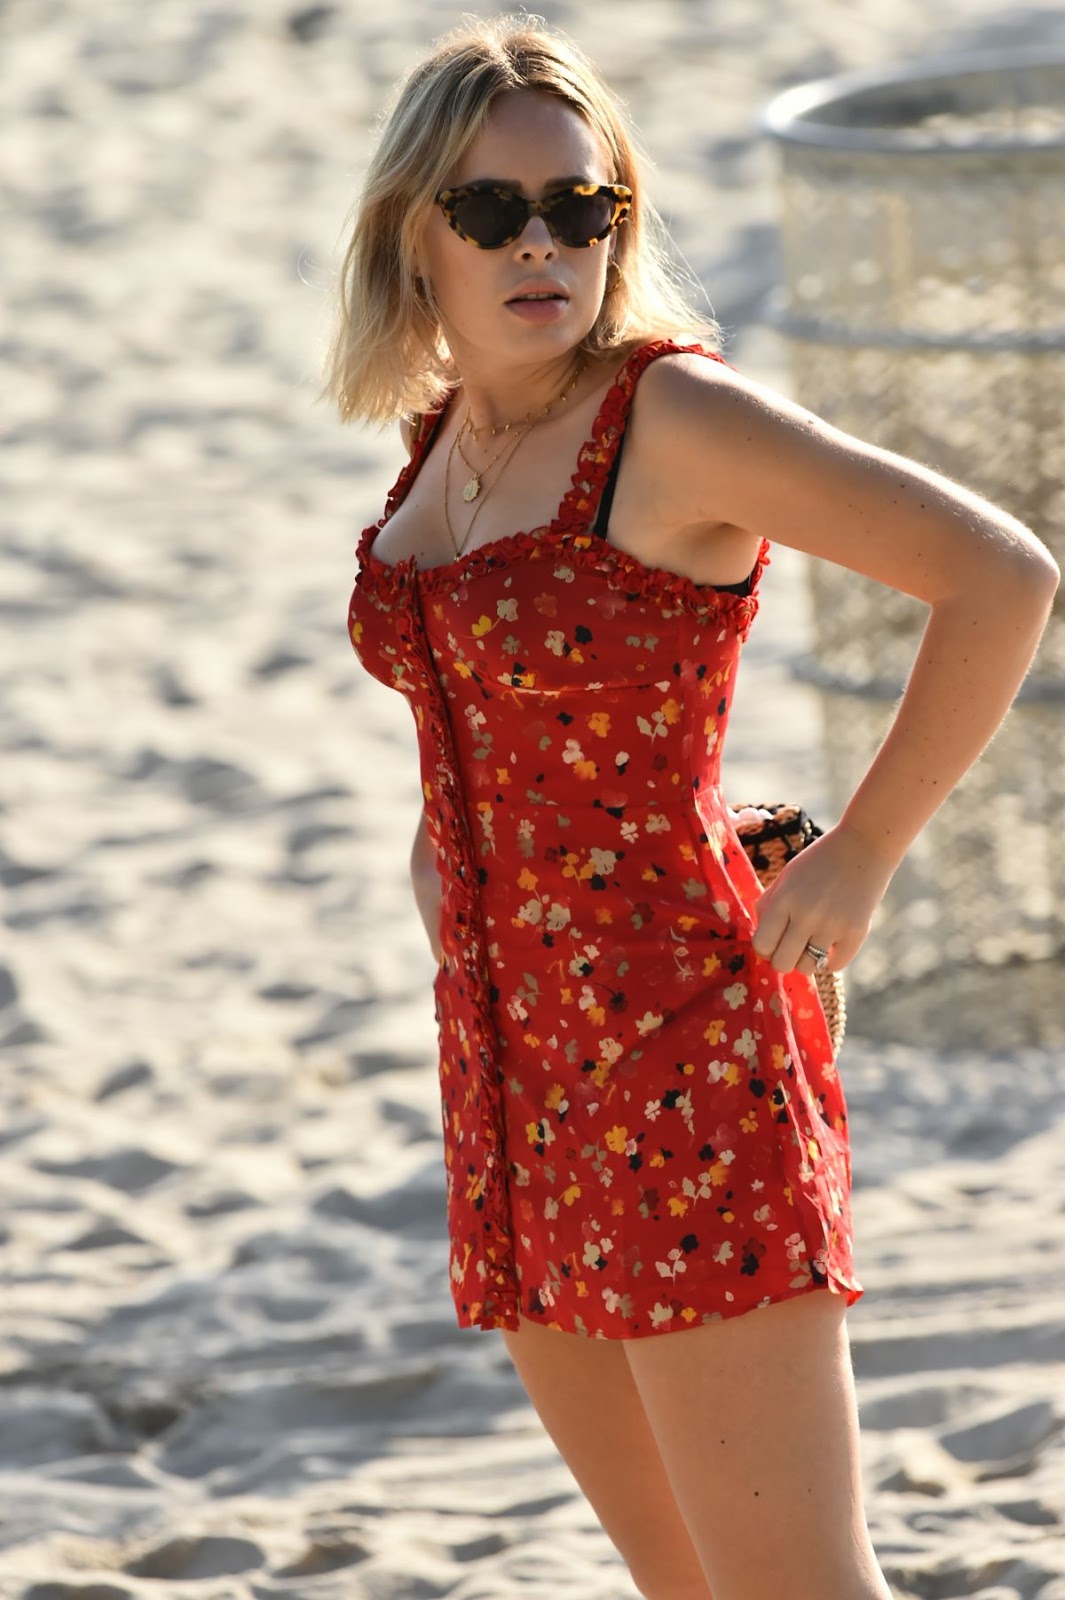 Tanya Burr A Beautiful Bikini On The Beach In Miami Best Of